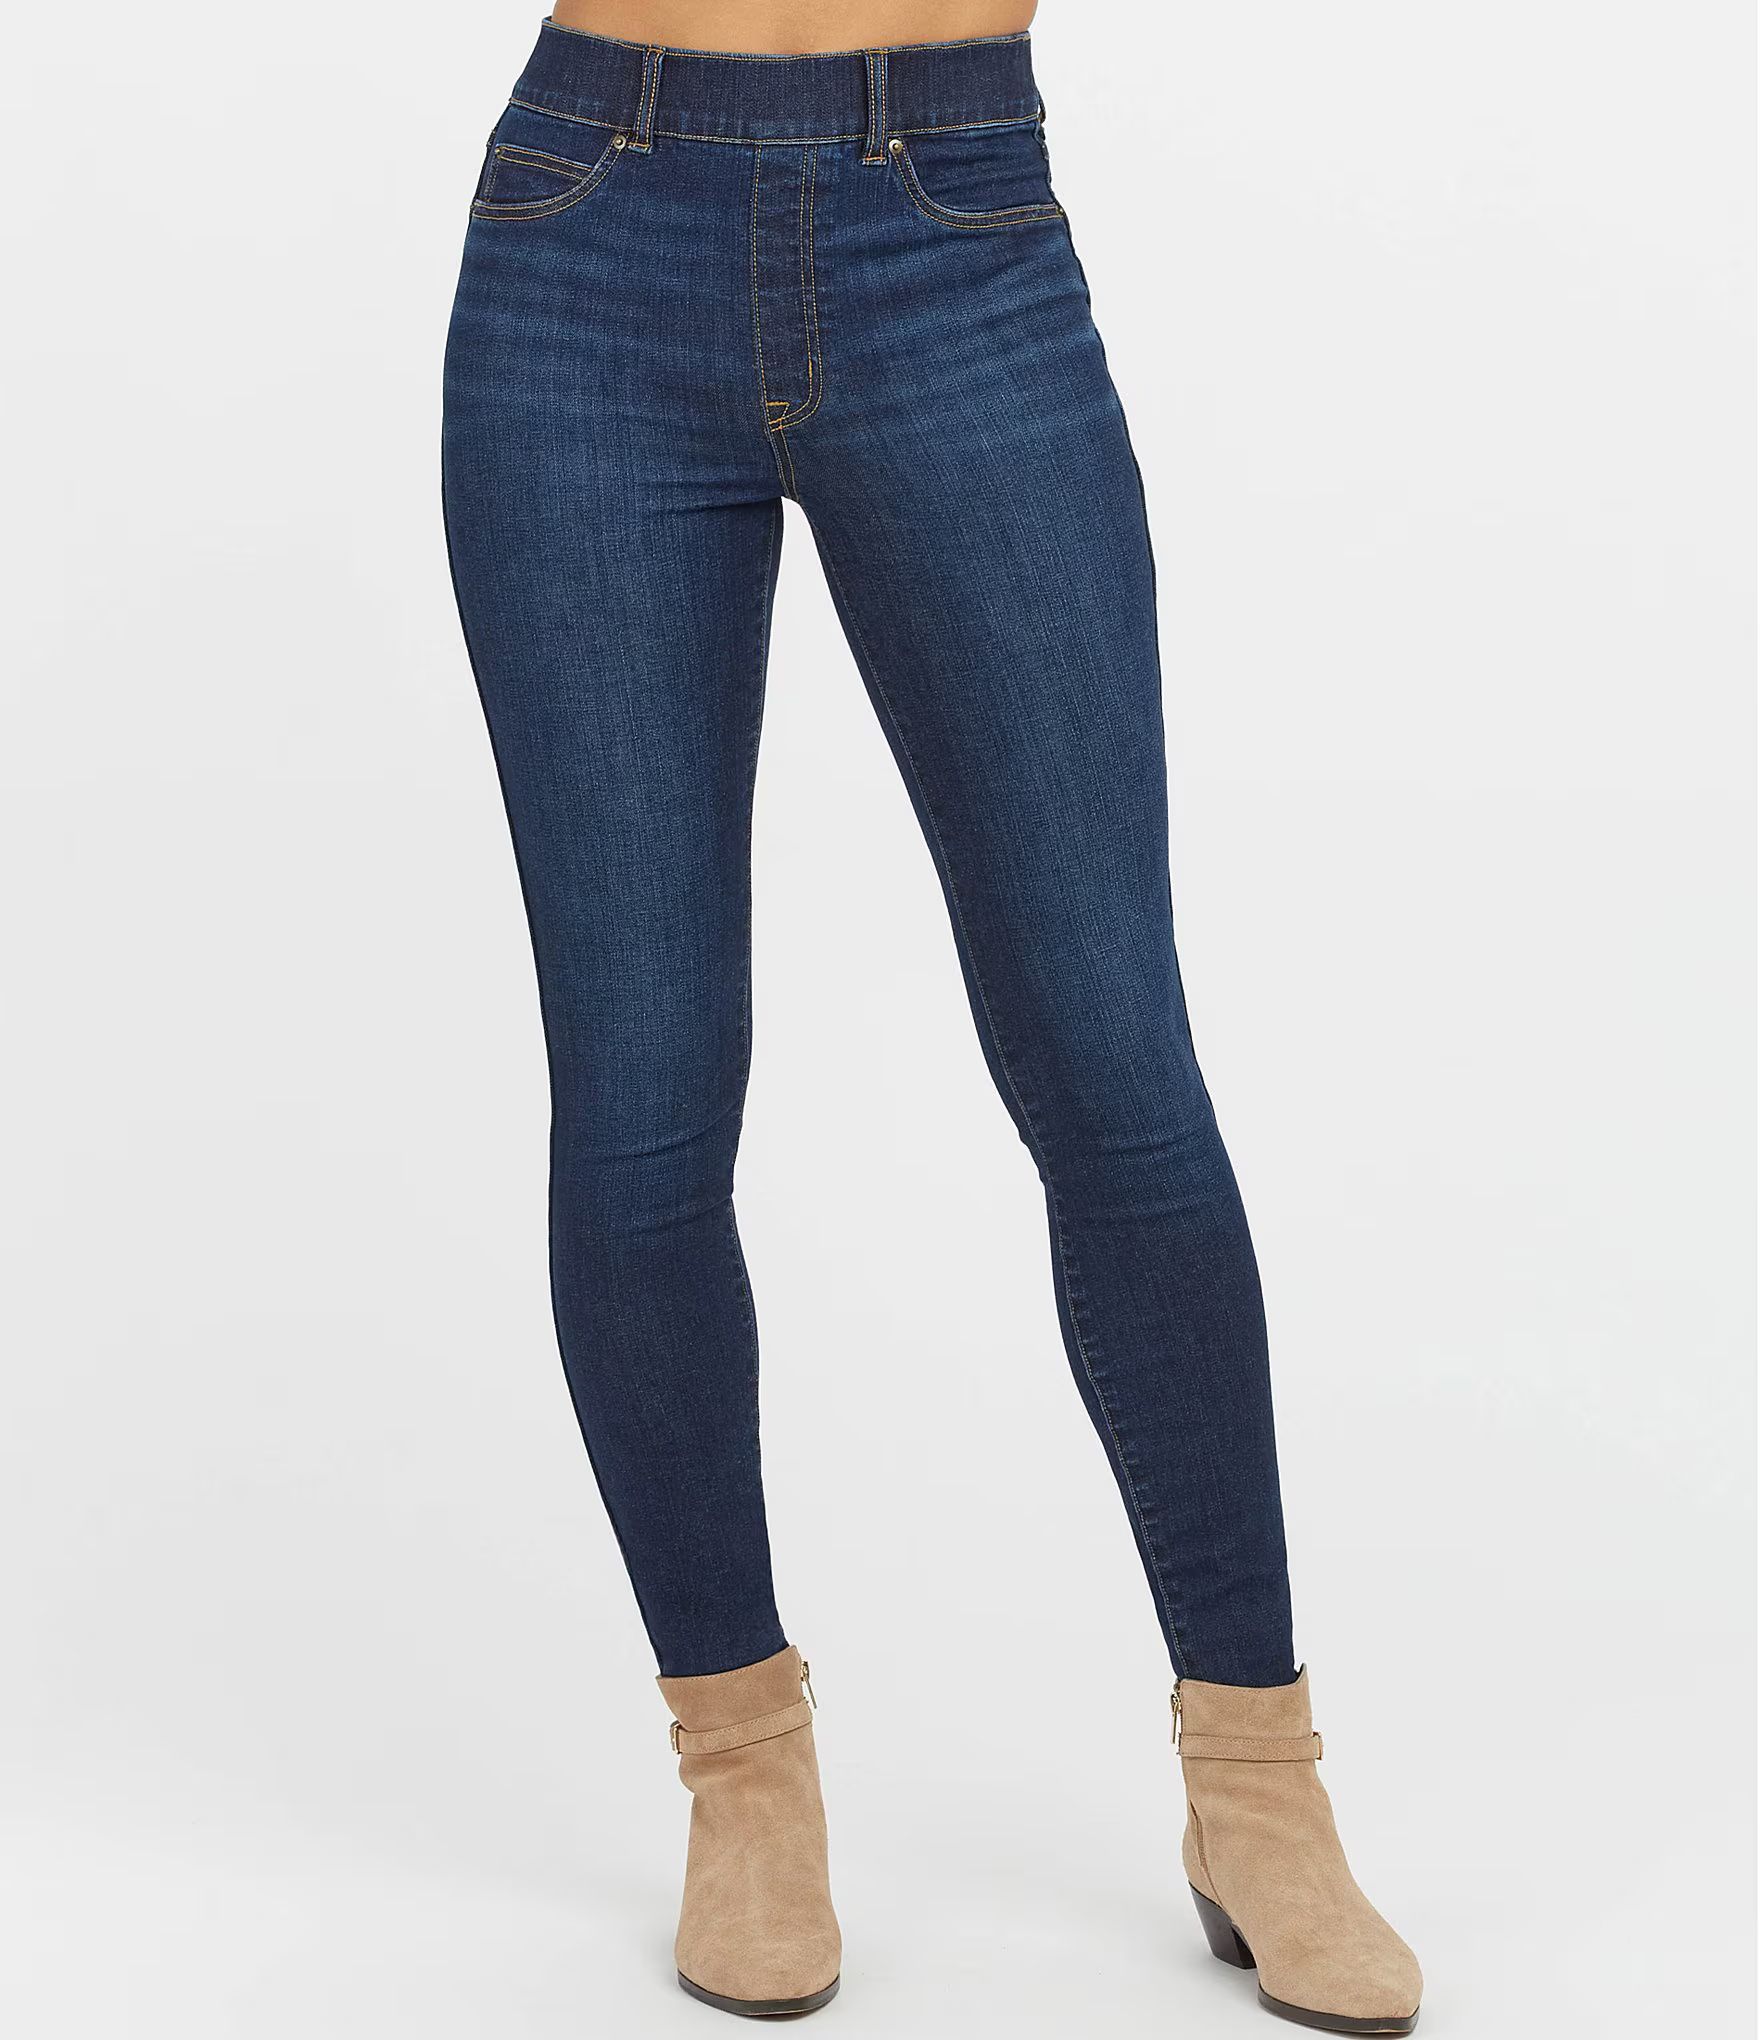 Ankle Length Skinny Jeans | Dillard's